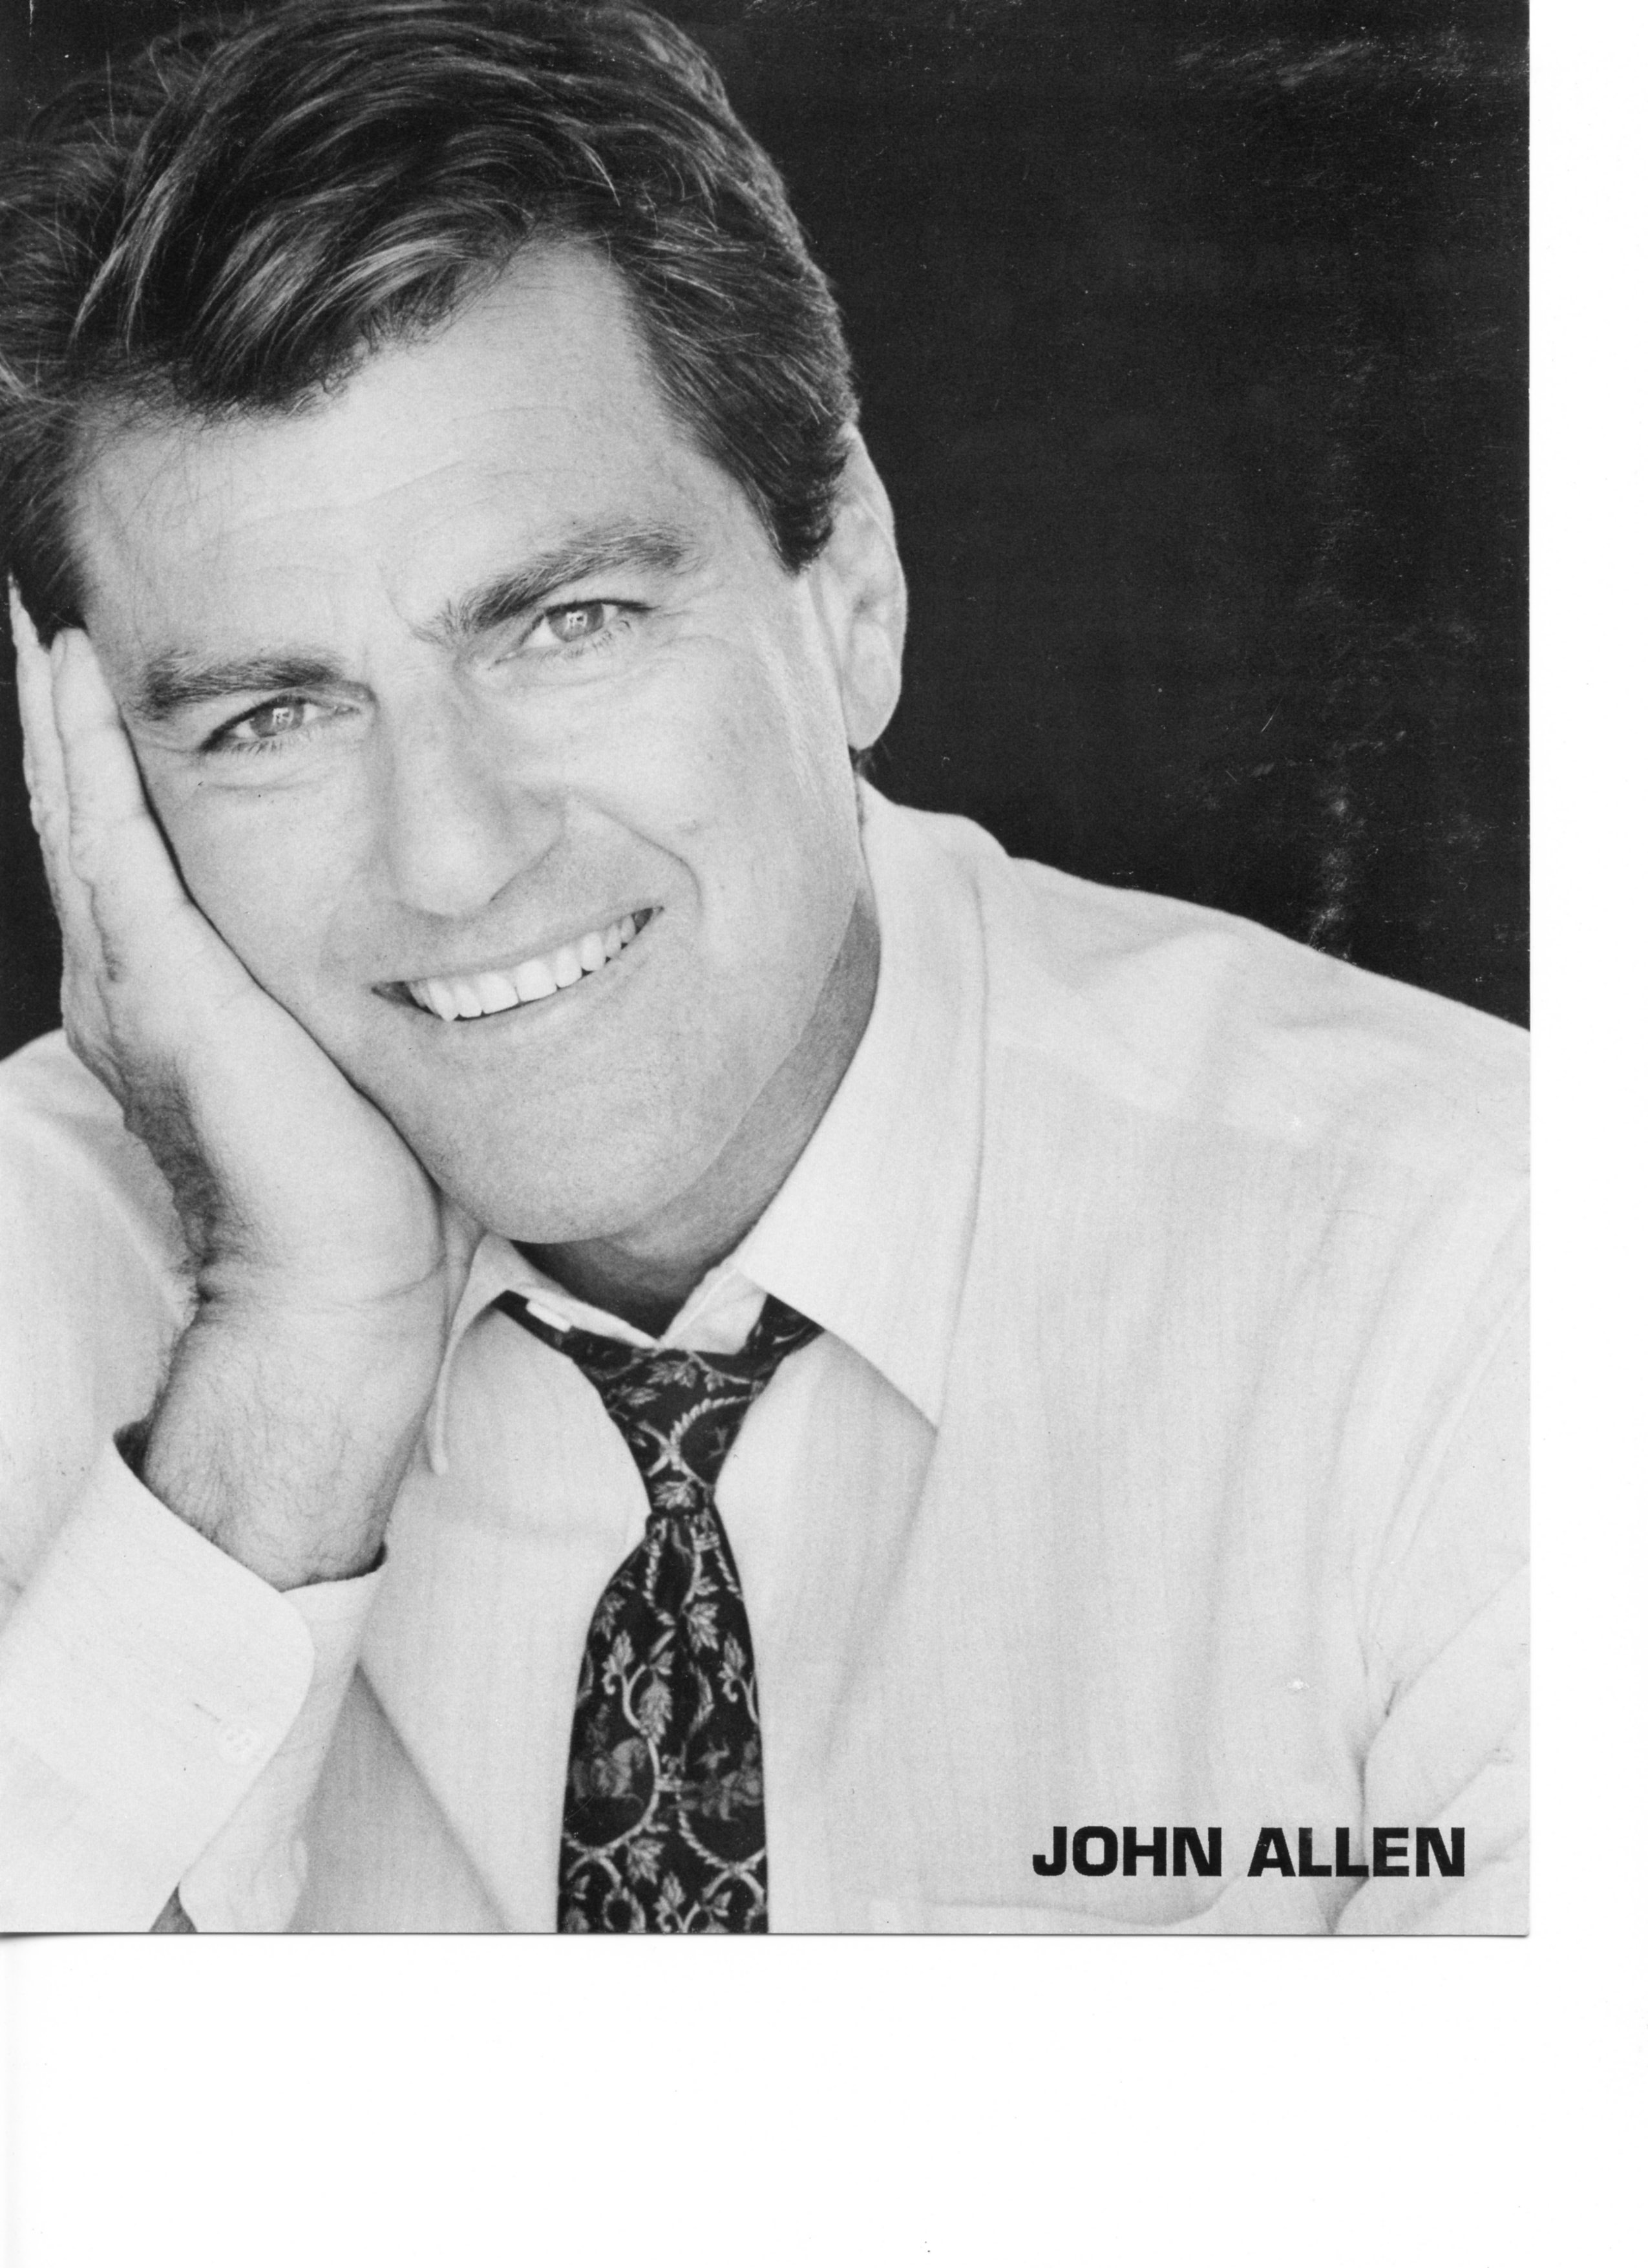 John Allen